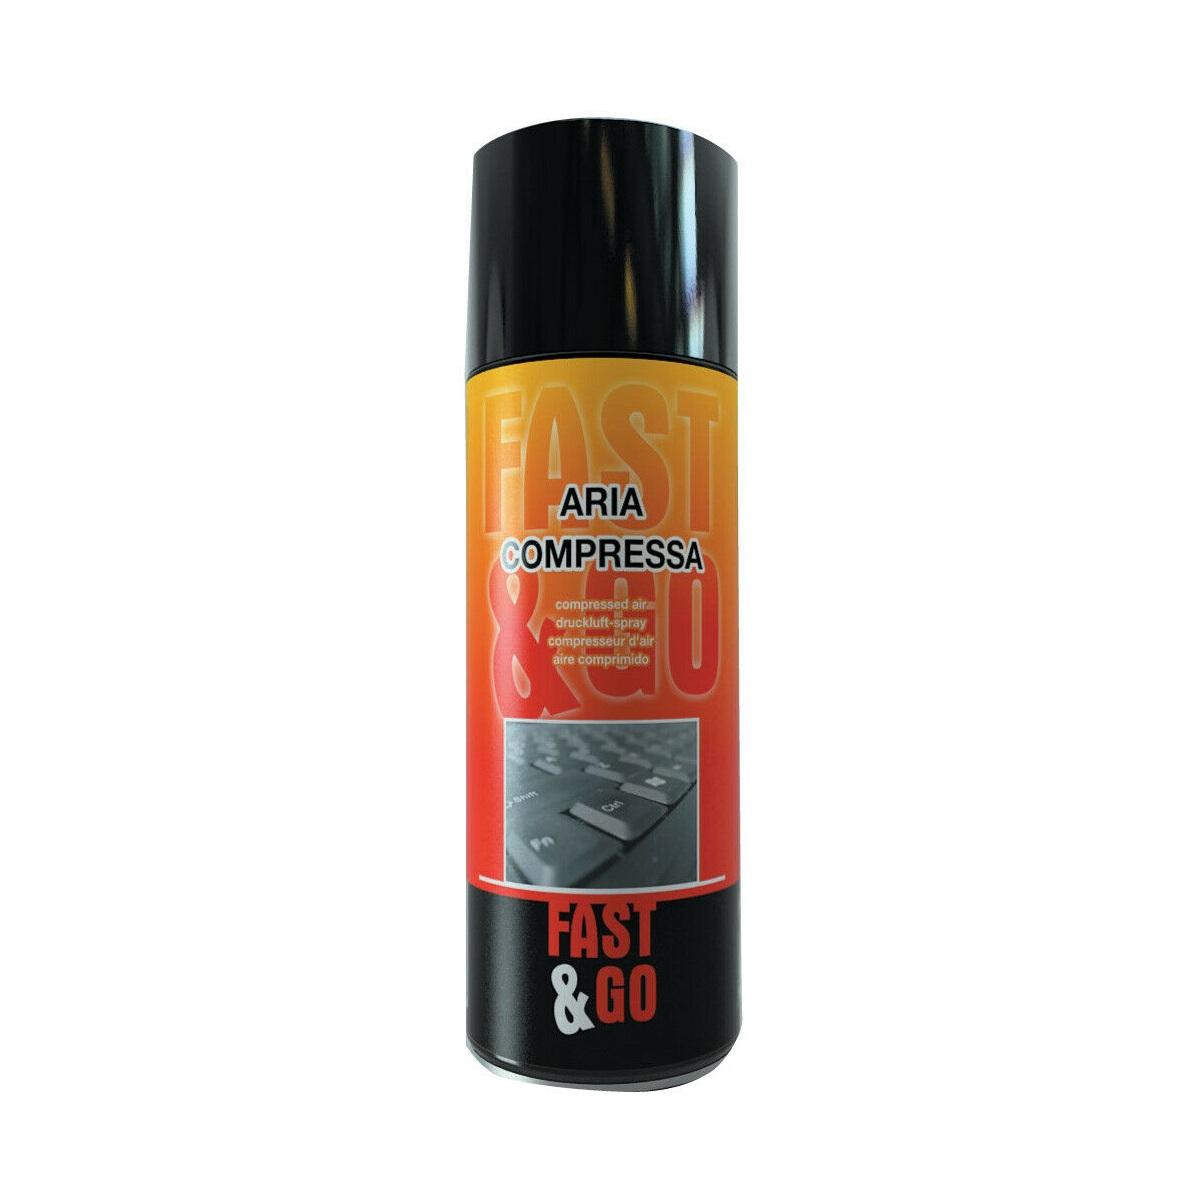 Aria compressa spray 400 ml fast&go 2103250000023 8032727741449